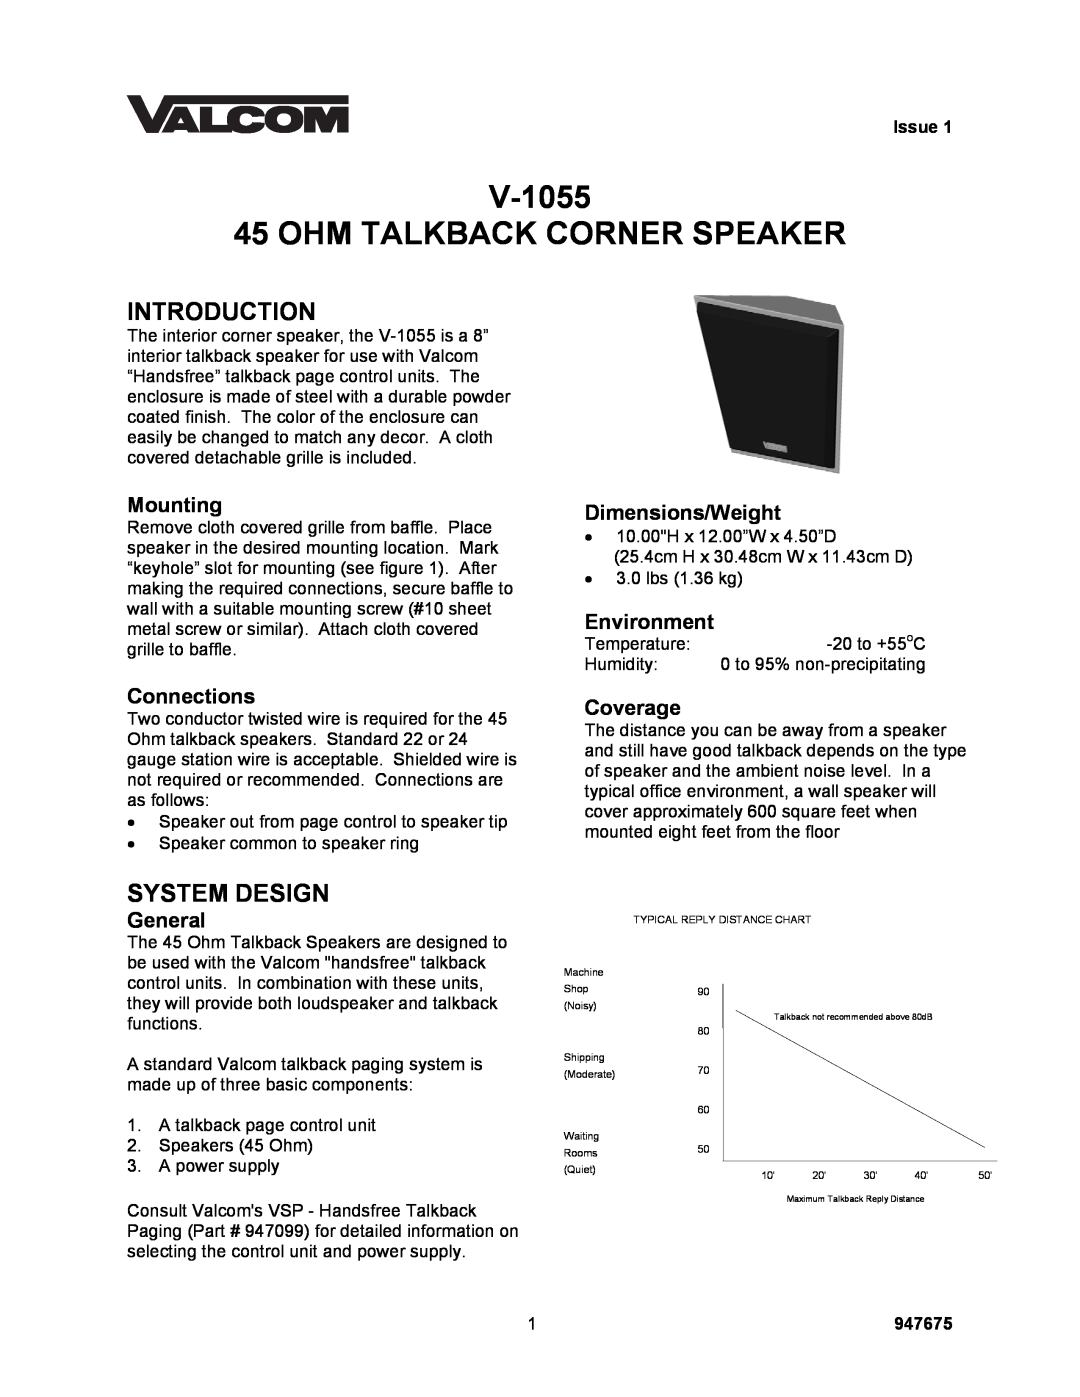 Valcom dimensions Introduction, System Design, Issue, 947675, V-1055 45 OHM TALKBACK CORNER SPEAKER, Mounting, Coverage 